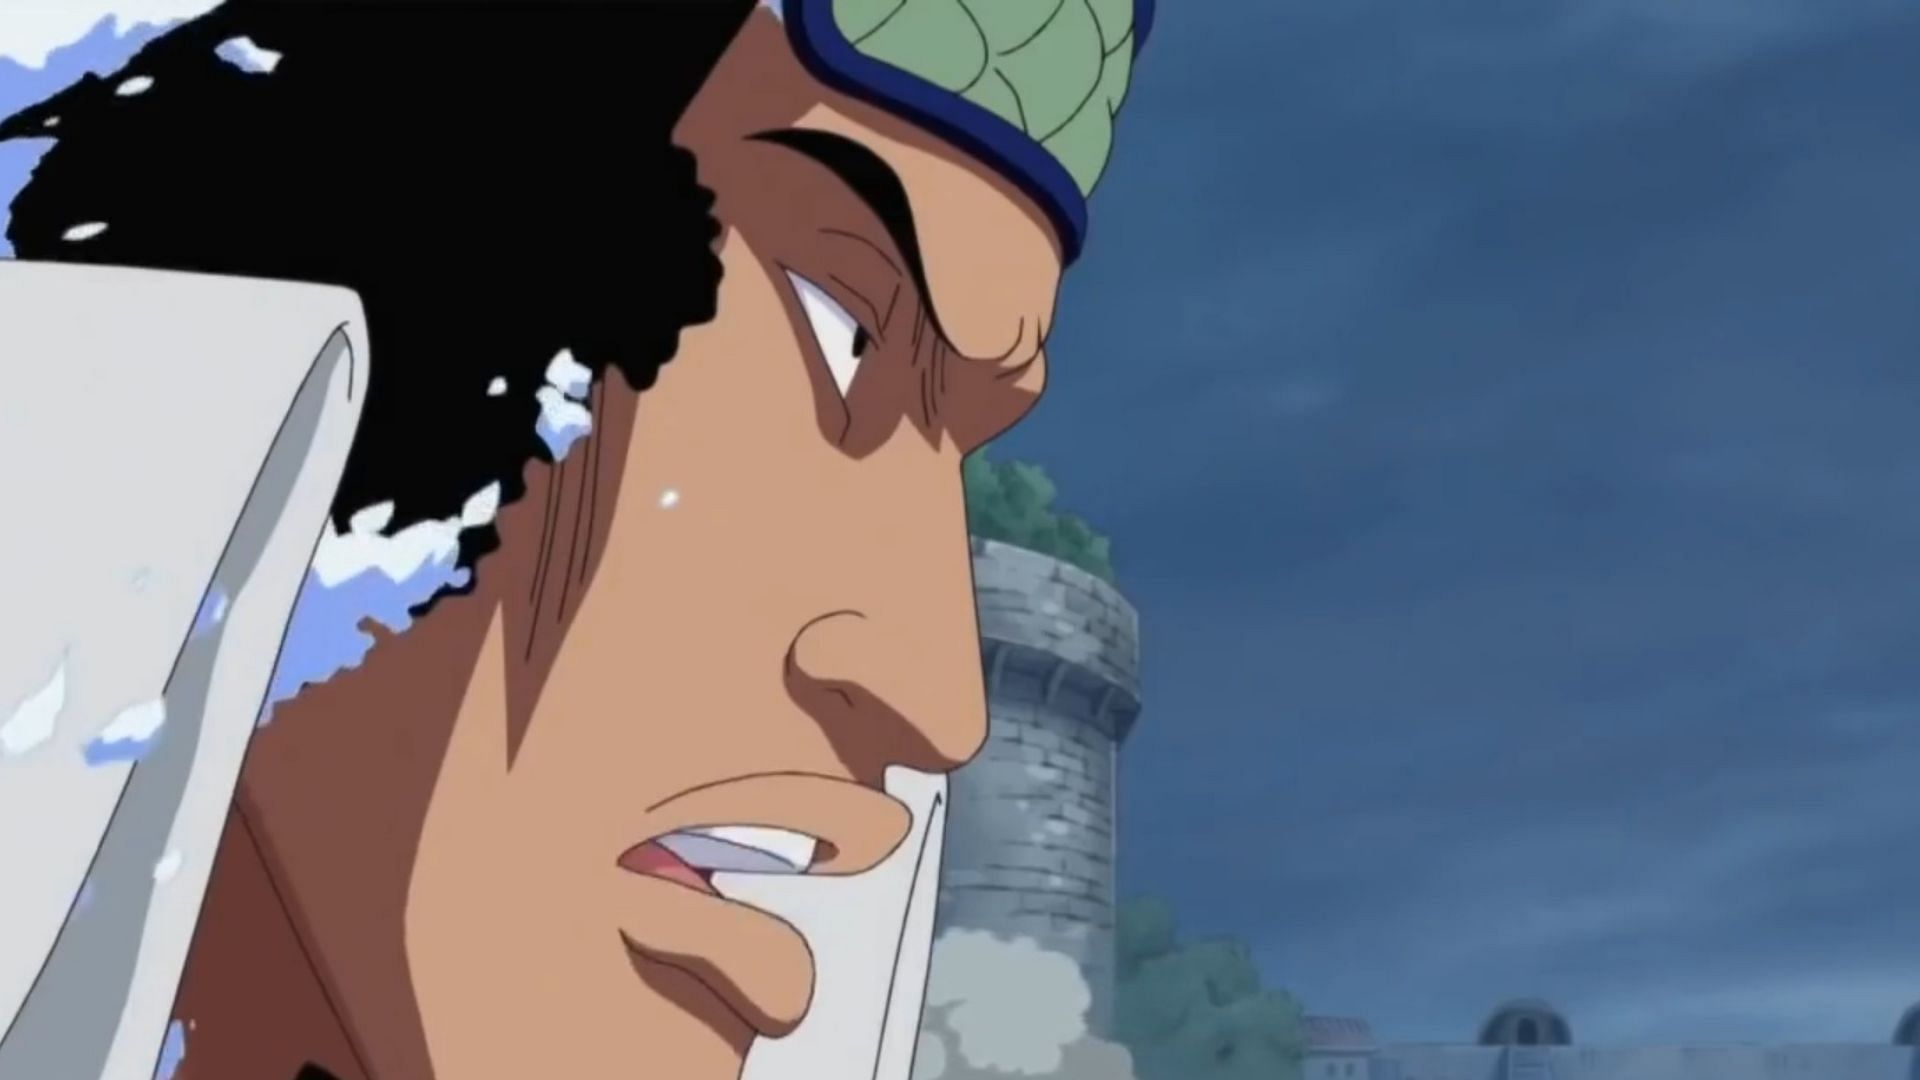 Kuzan from the One Piece anime (Image via Toei Animation)